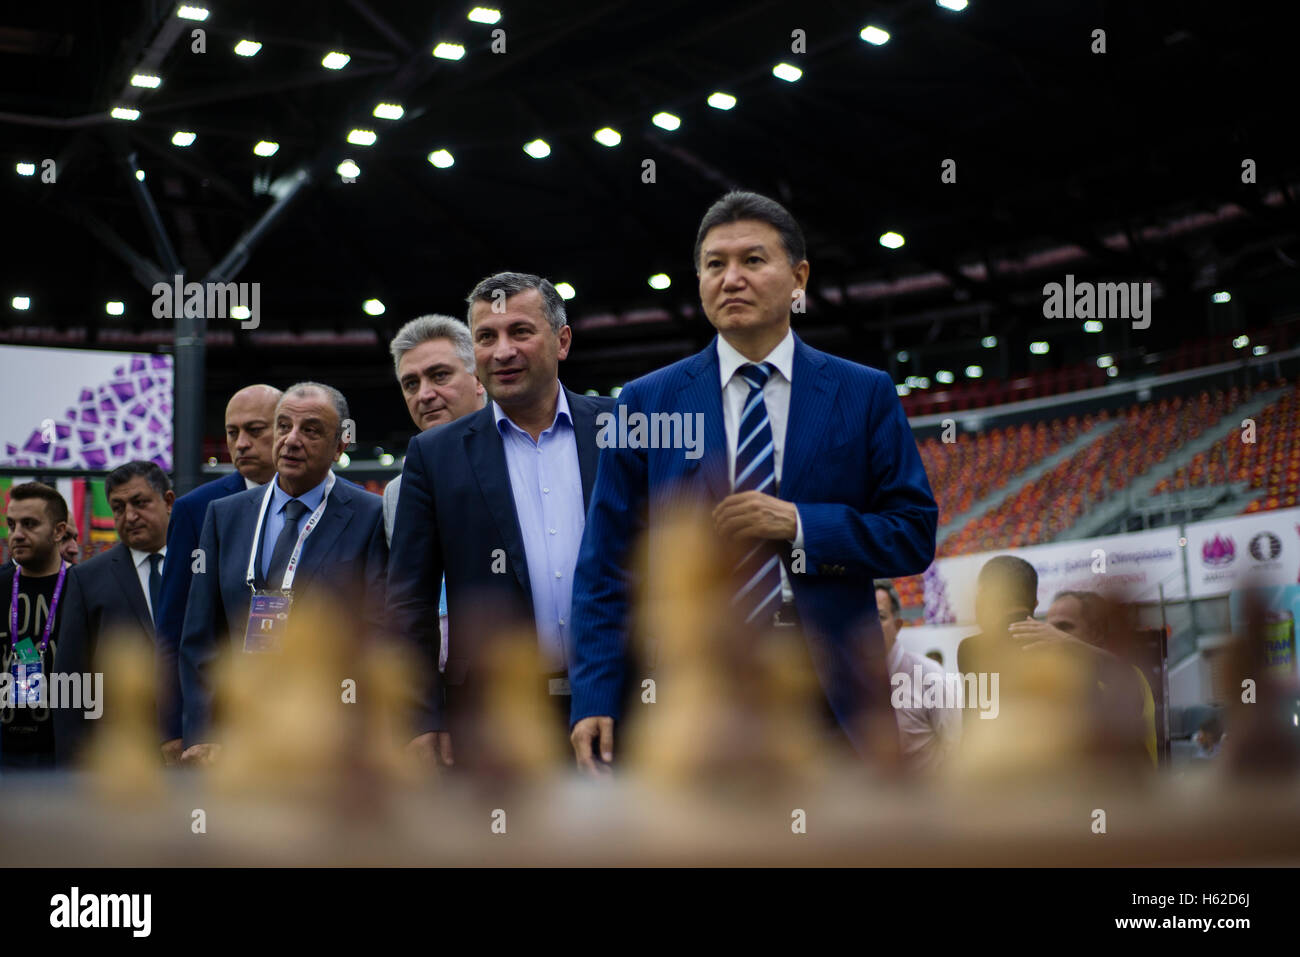 President of FIDE Kirsan Ilyumzhinov during the final round at the 42nd Chess Olympiad in Baku, Azerbaijan on Tuesday, September 13, 2016. Stock Photo